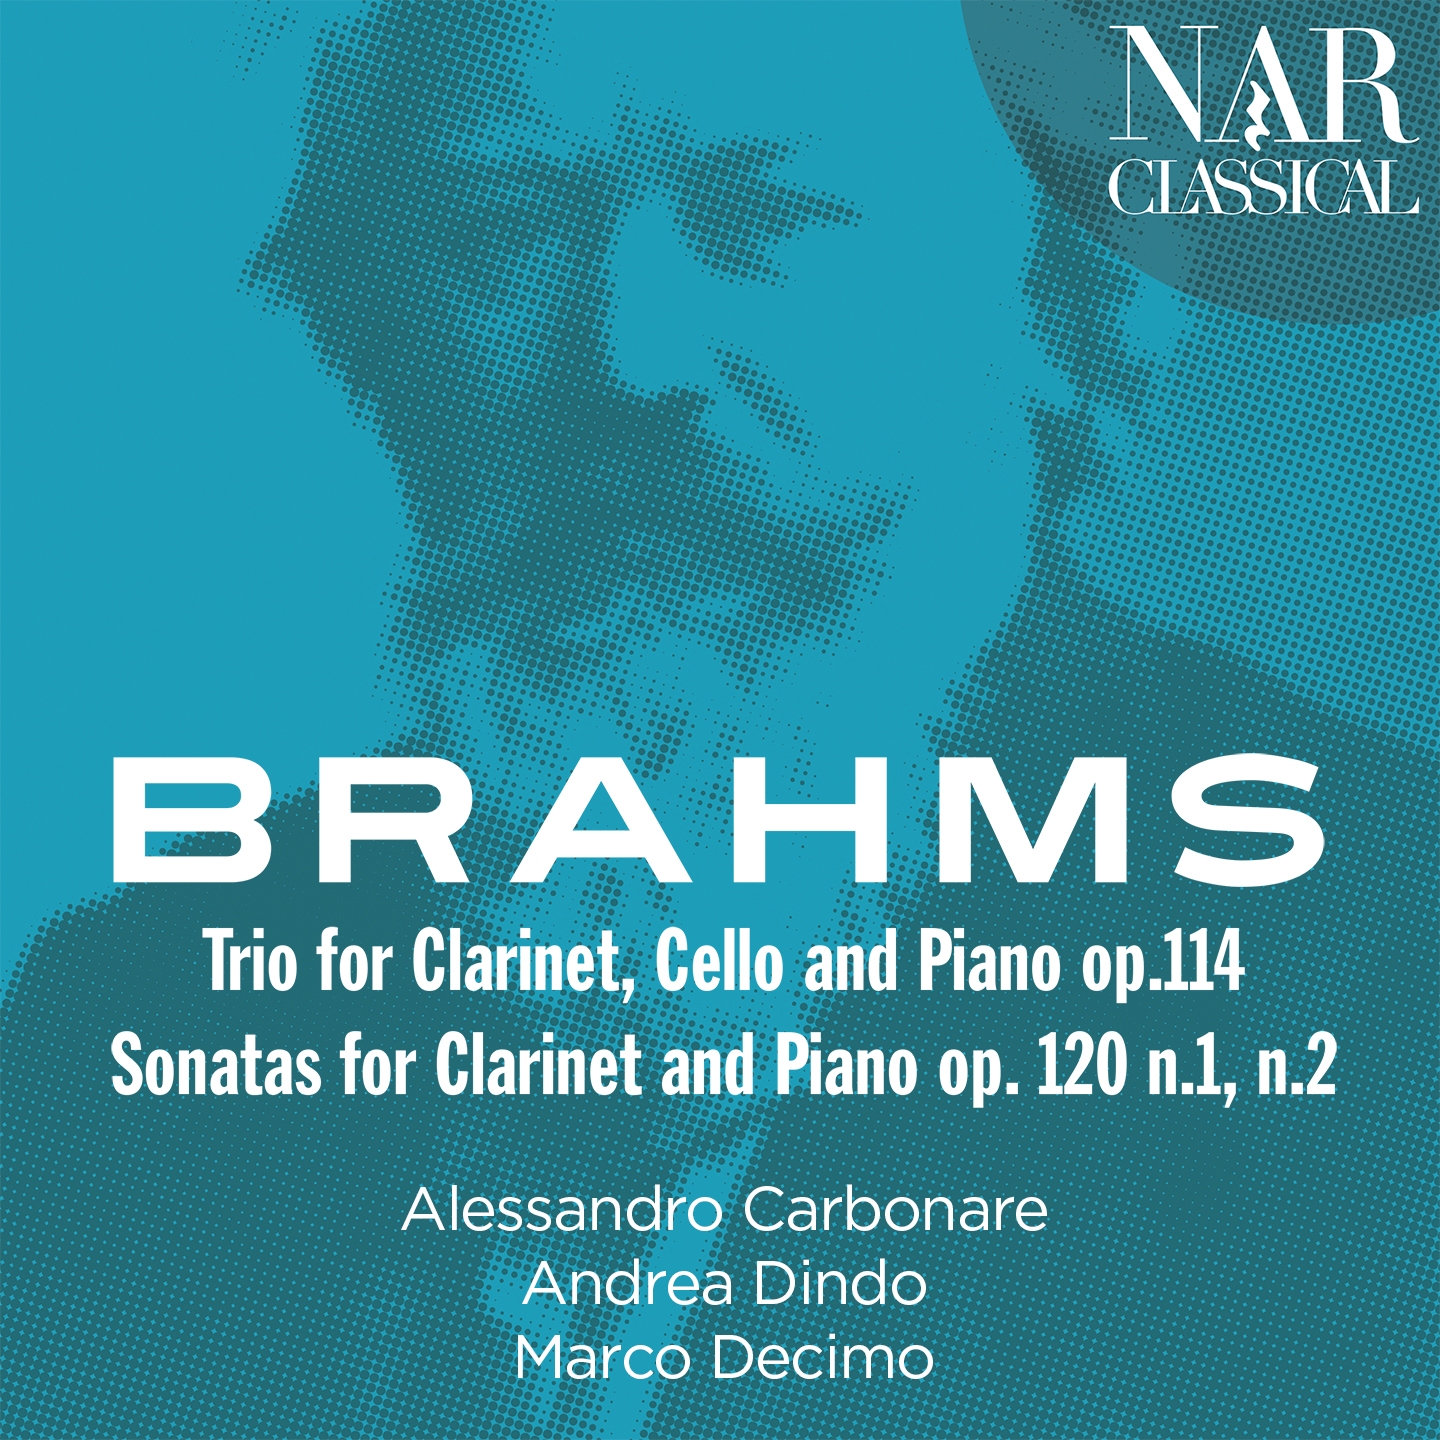 Clarinet Trio in A Minor, Op.114: I. Allegro